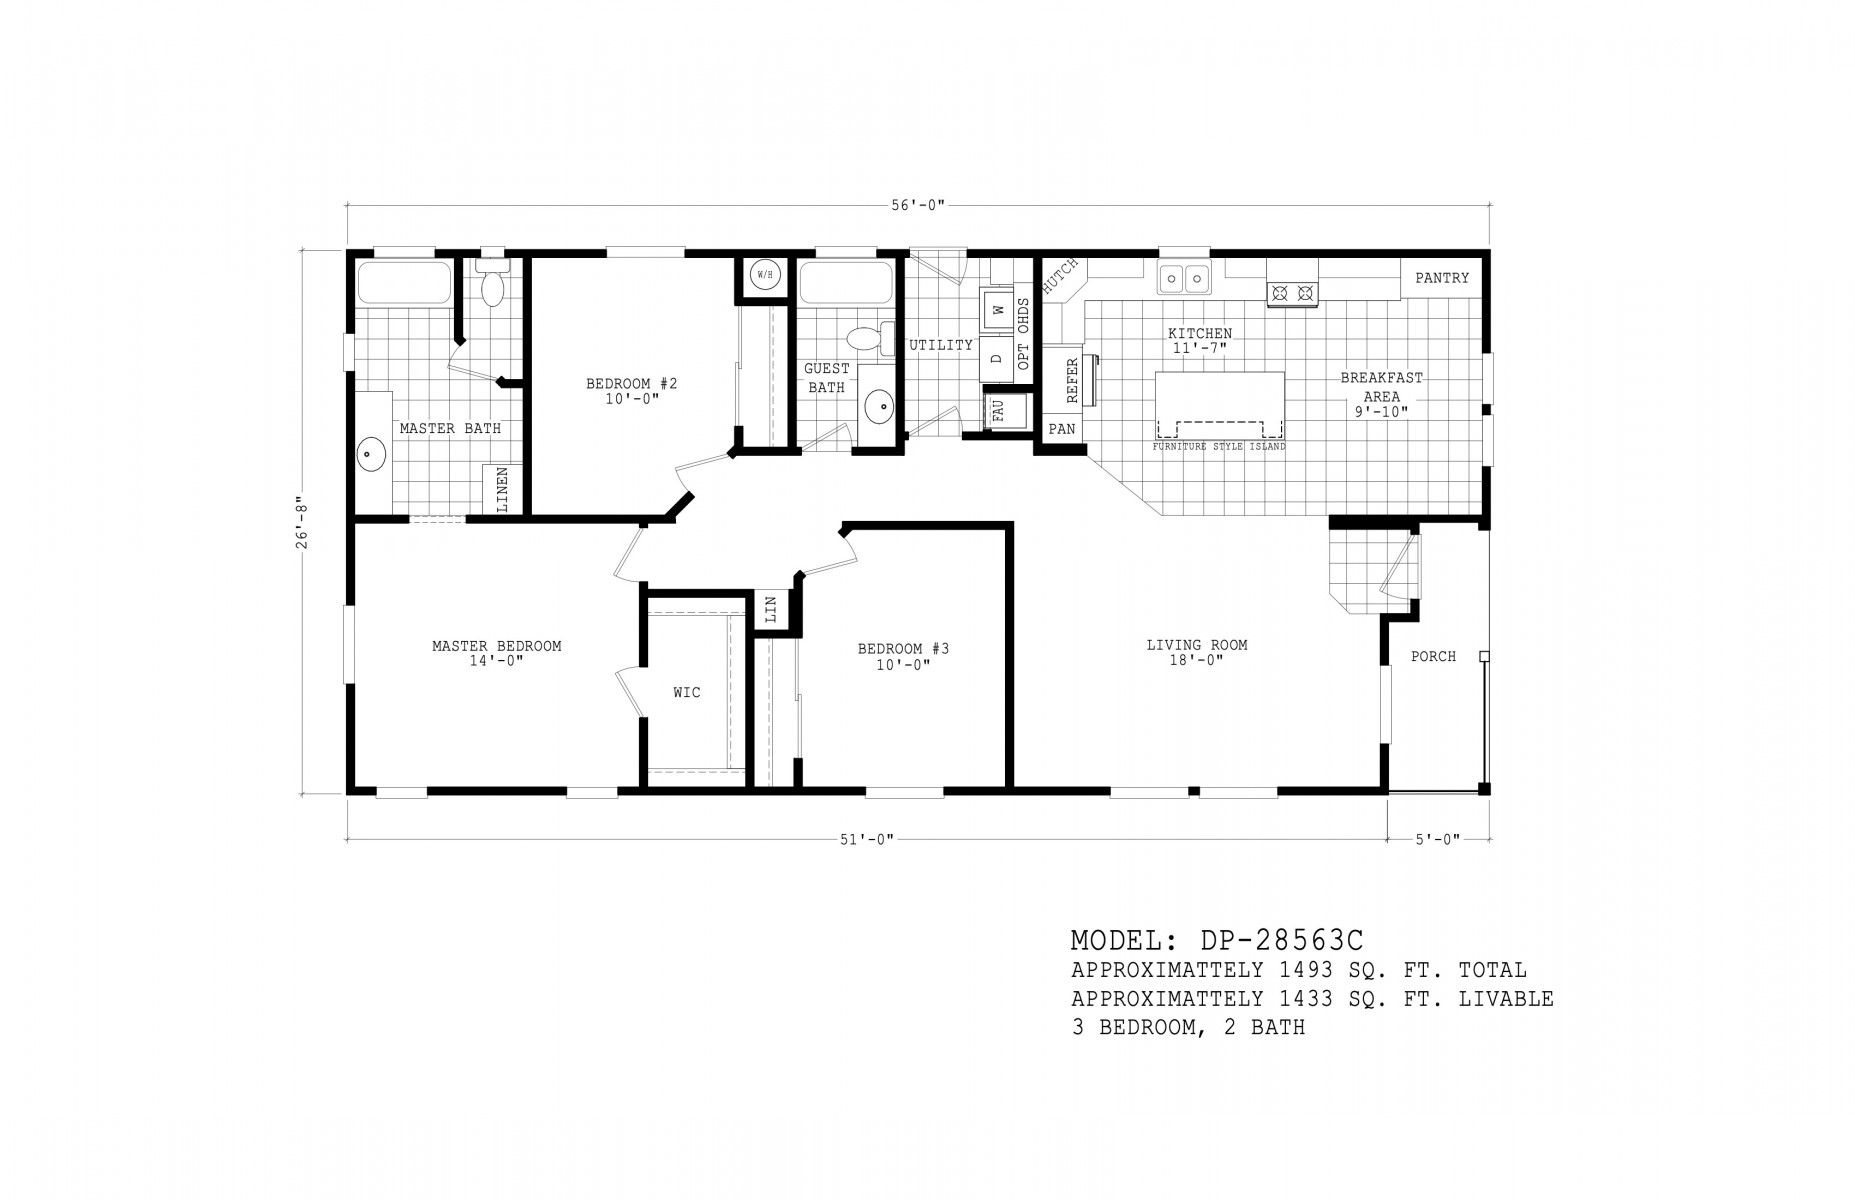 Homes Direct Modular Homes - Model DP28563C - Floorplan